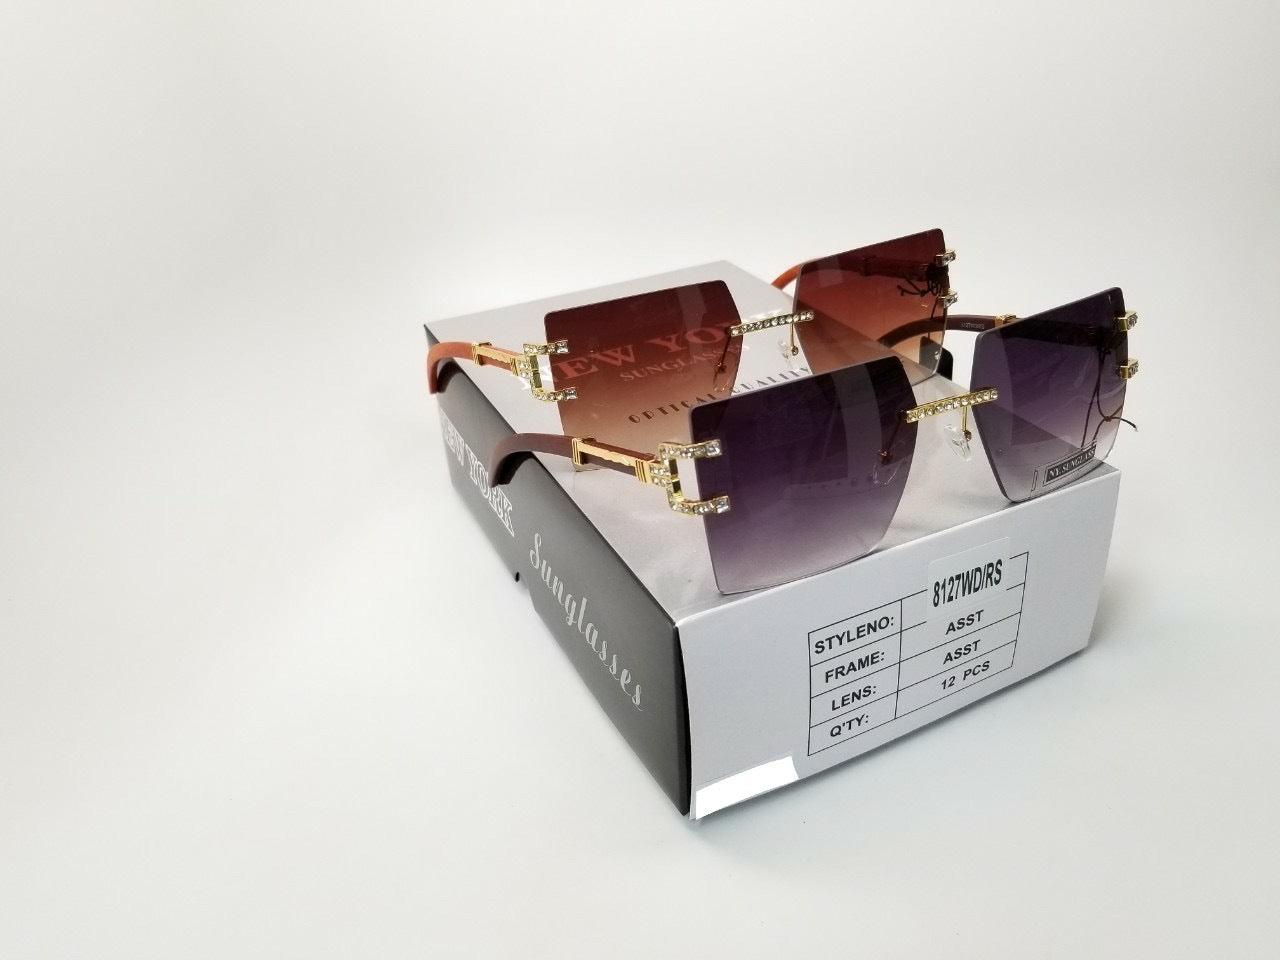 Wholesale Fashion Sunglasses #8127WD/RS (12PC)